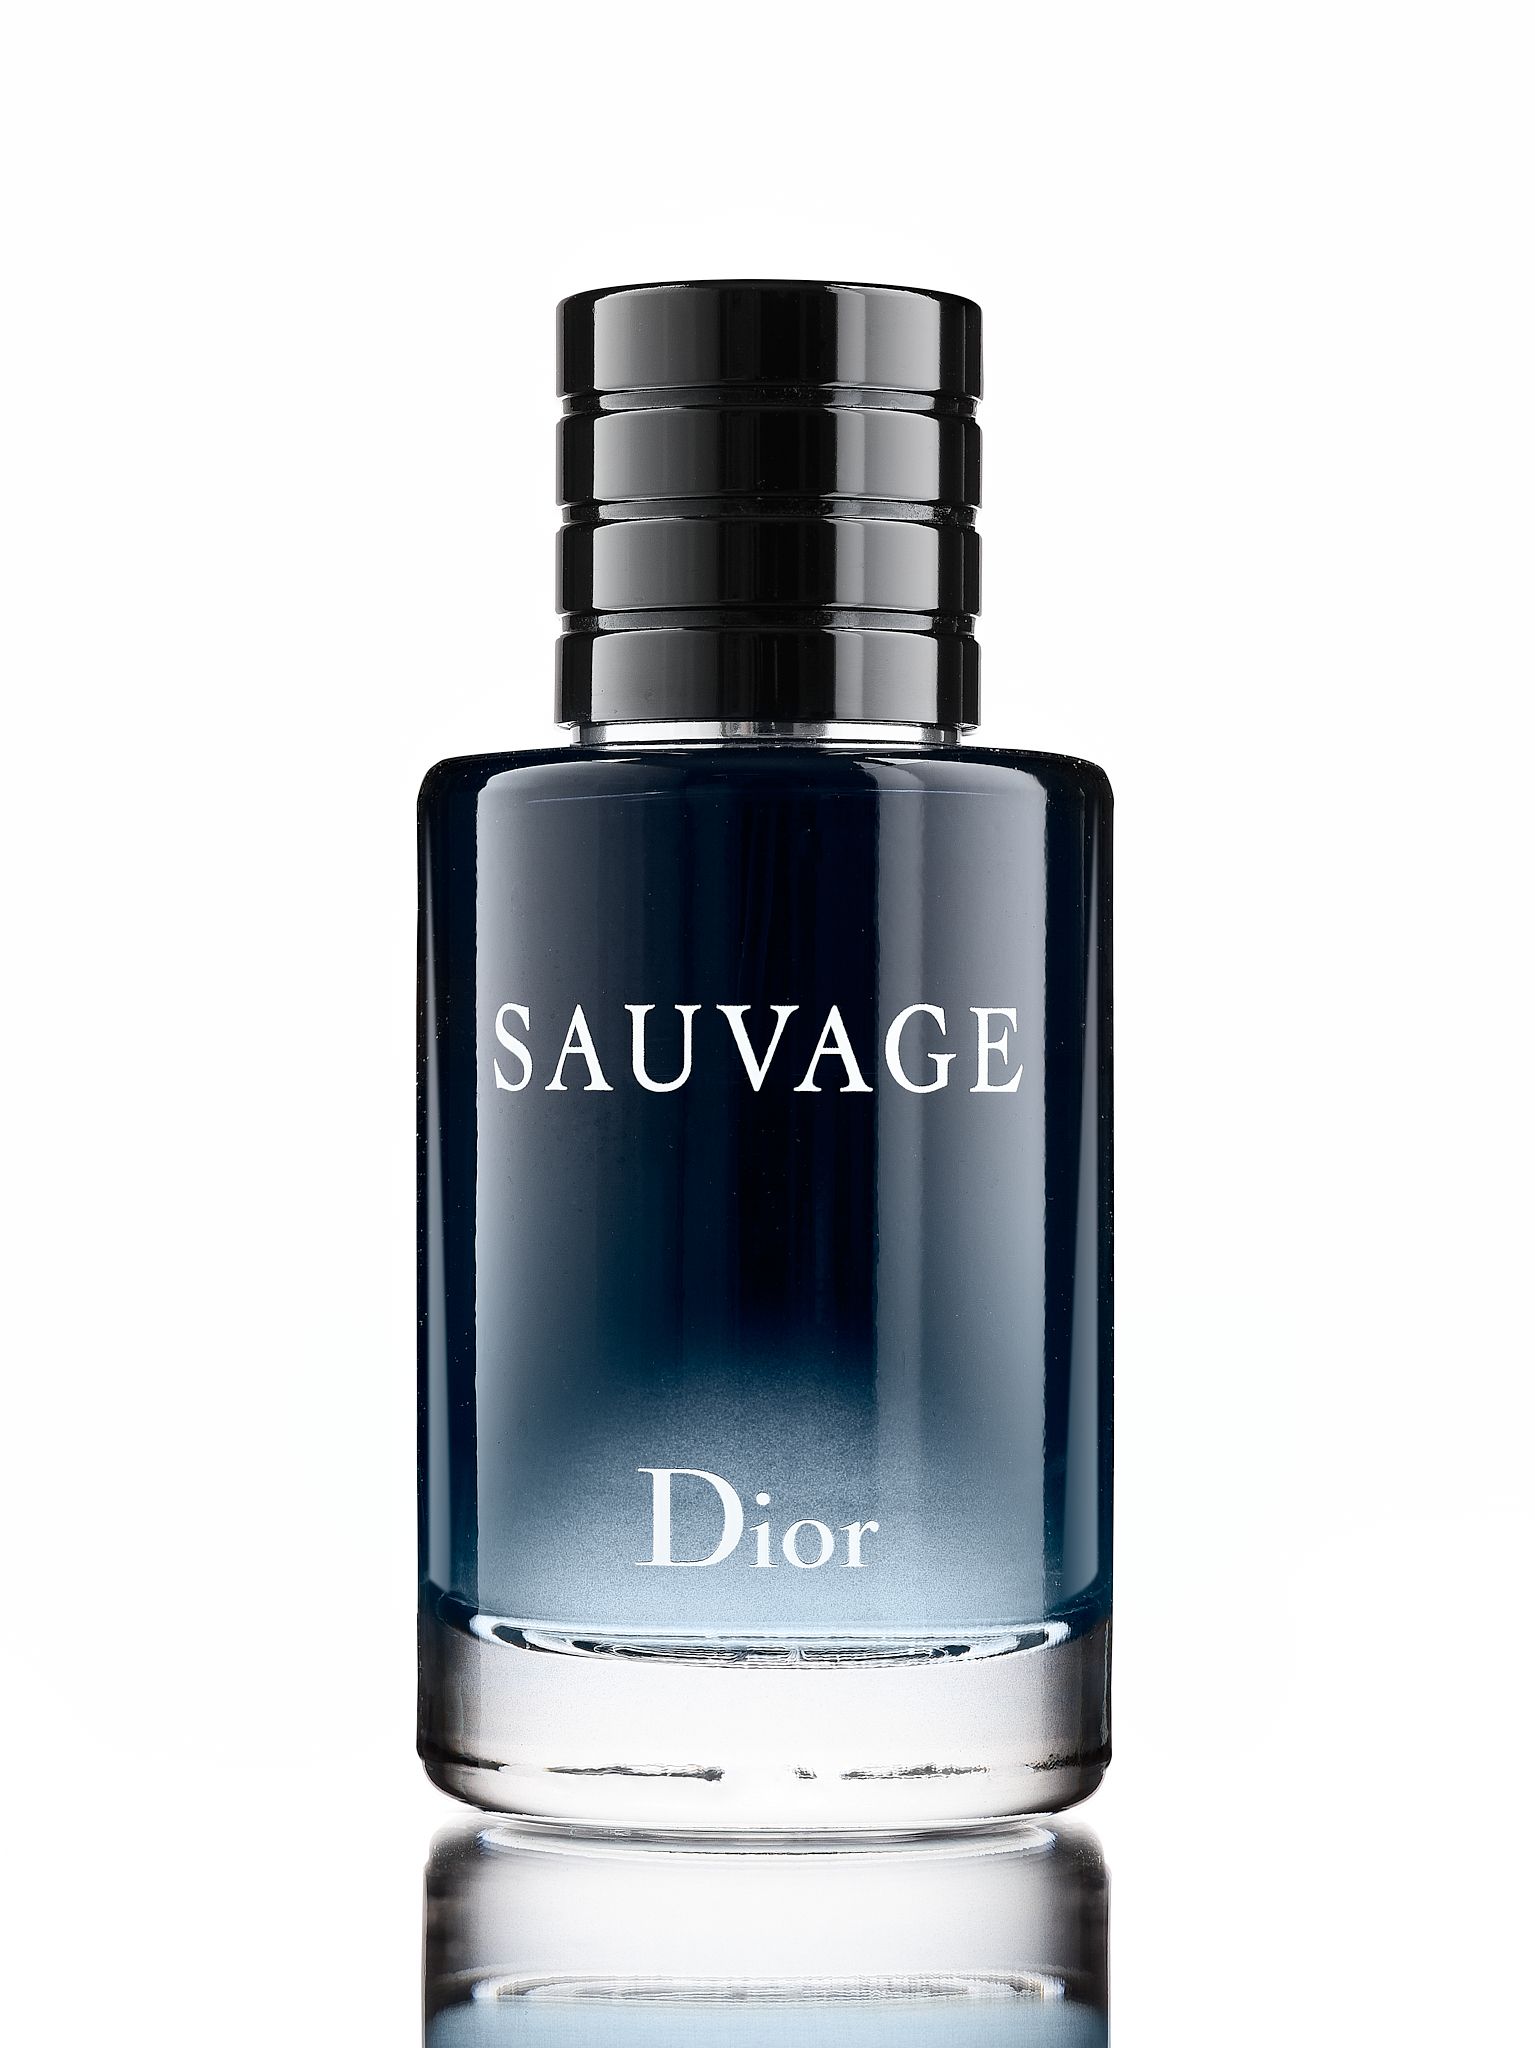 Dior Sauvage - Pic. 1